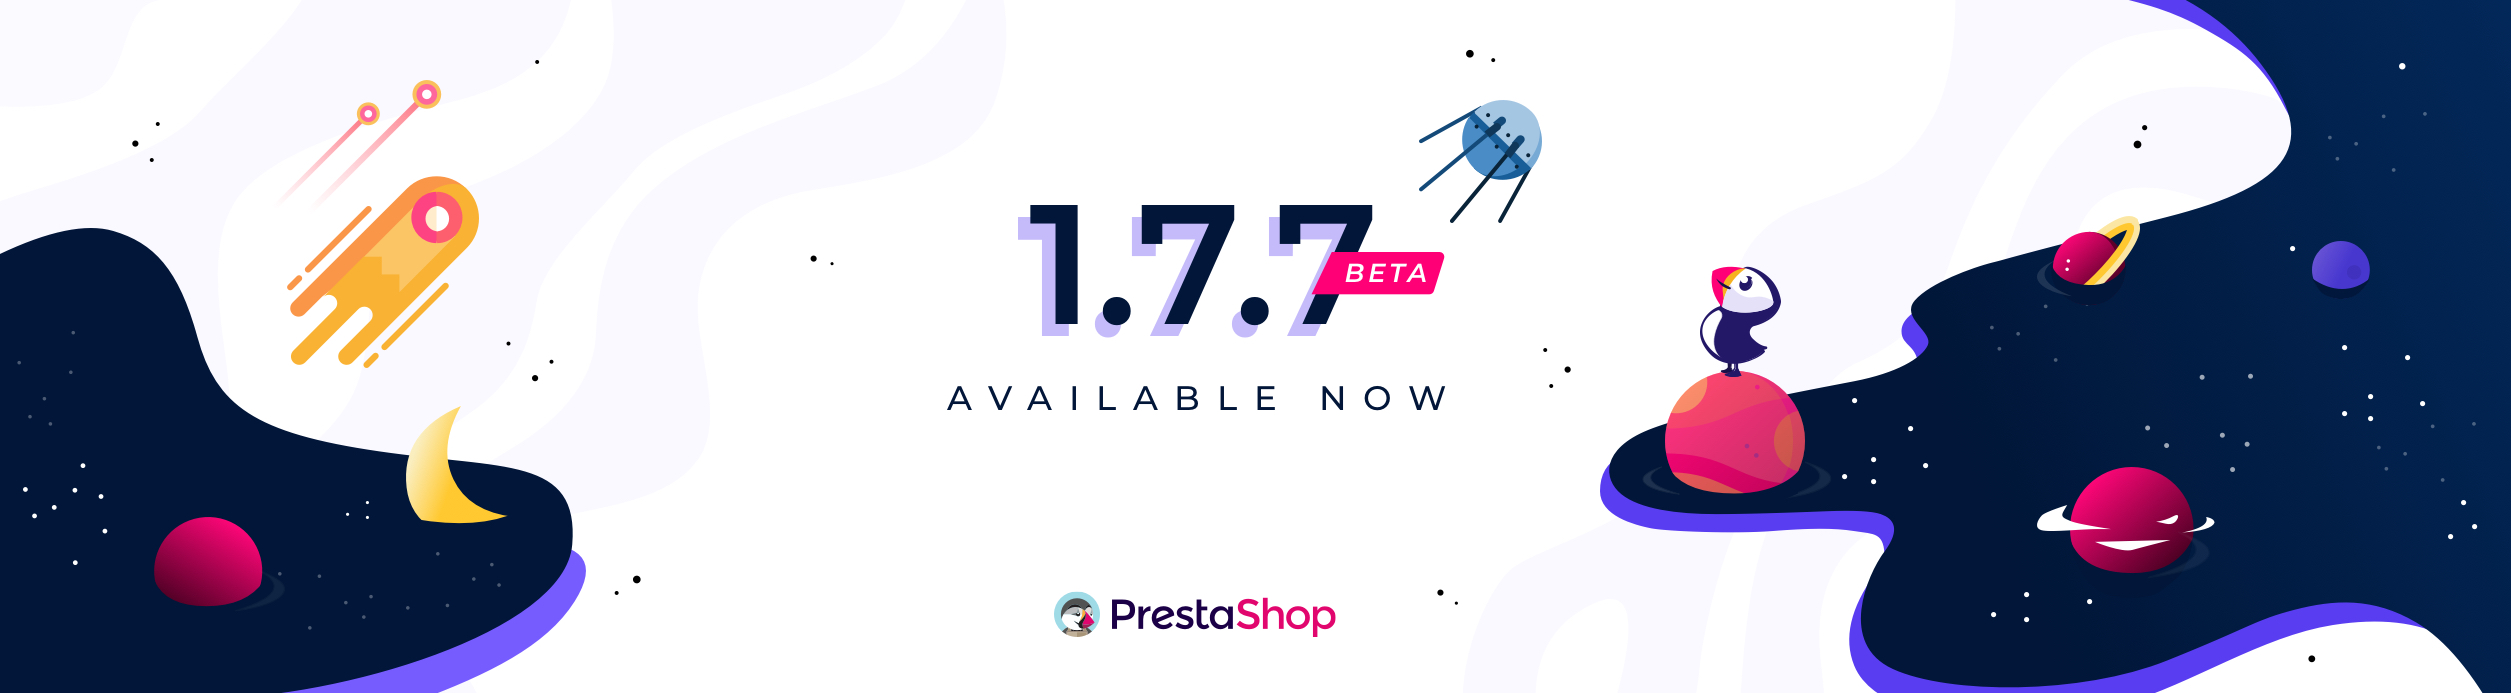 Prestashop 1.7.7.0 BETA Release